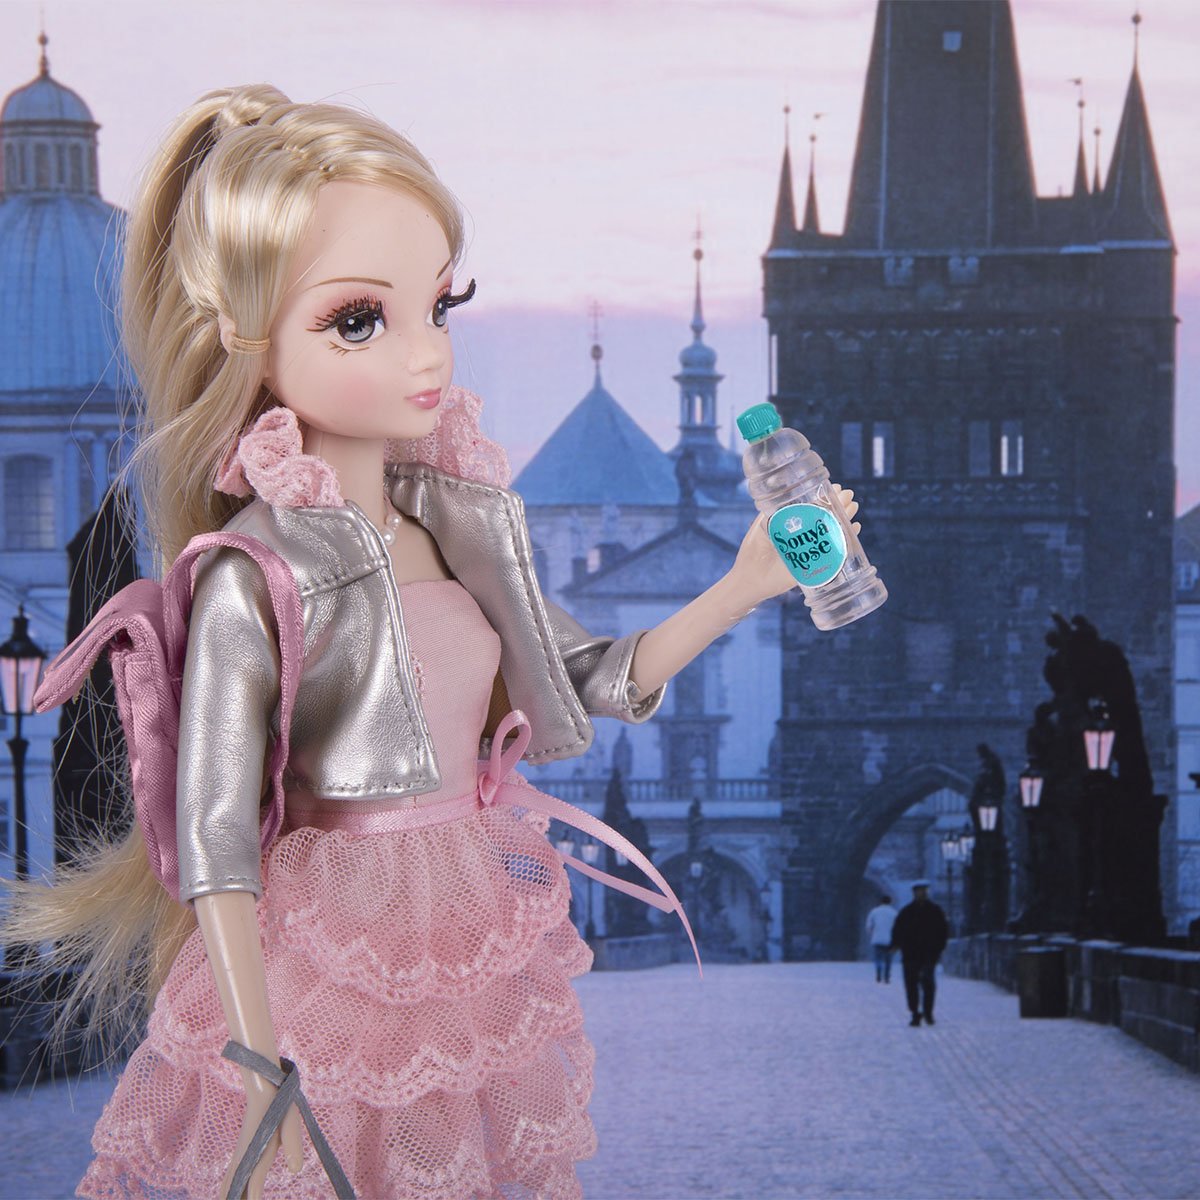 Кукла Sonyа Rose серии Daily collechion Вечеринка Путешествие